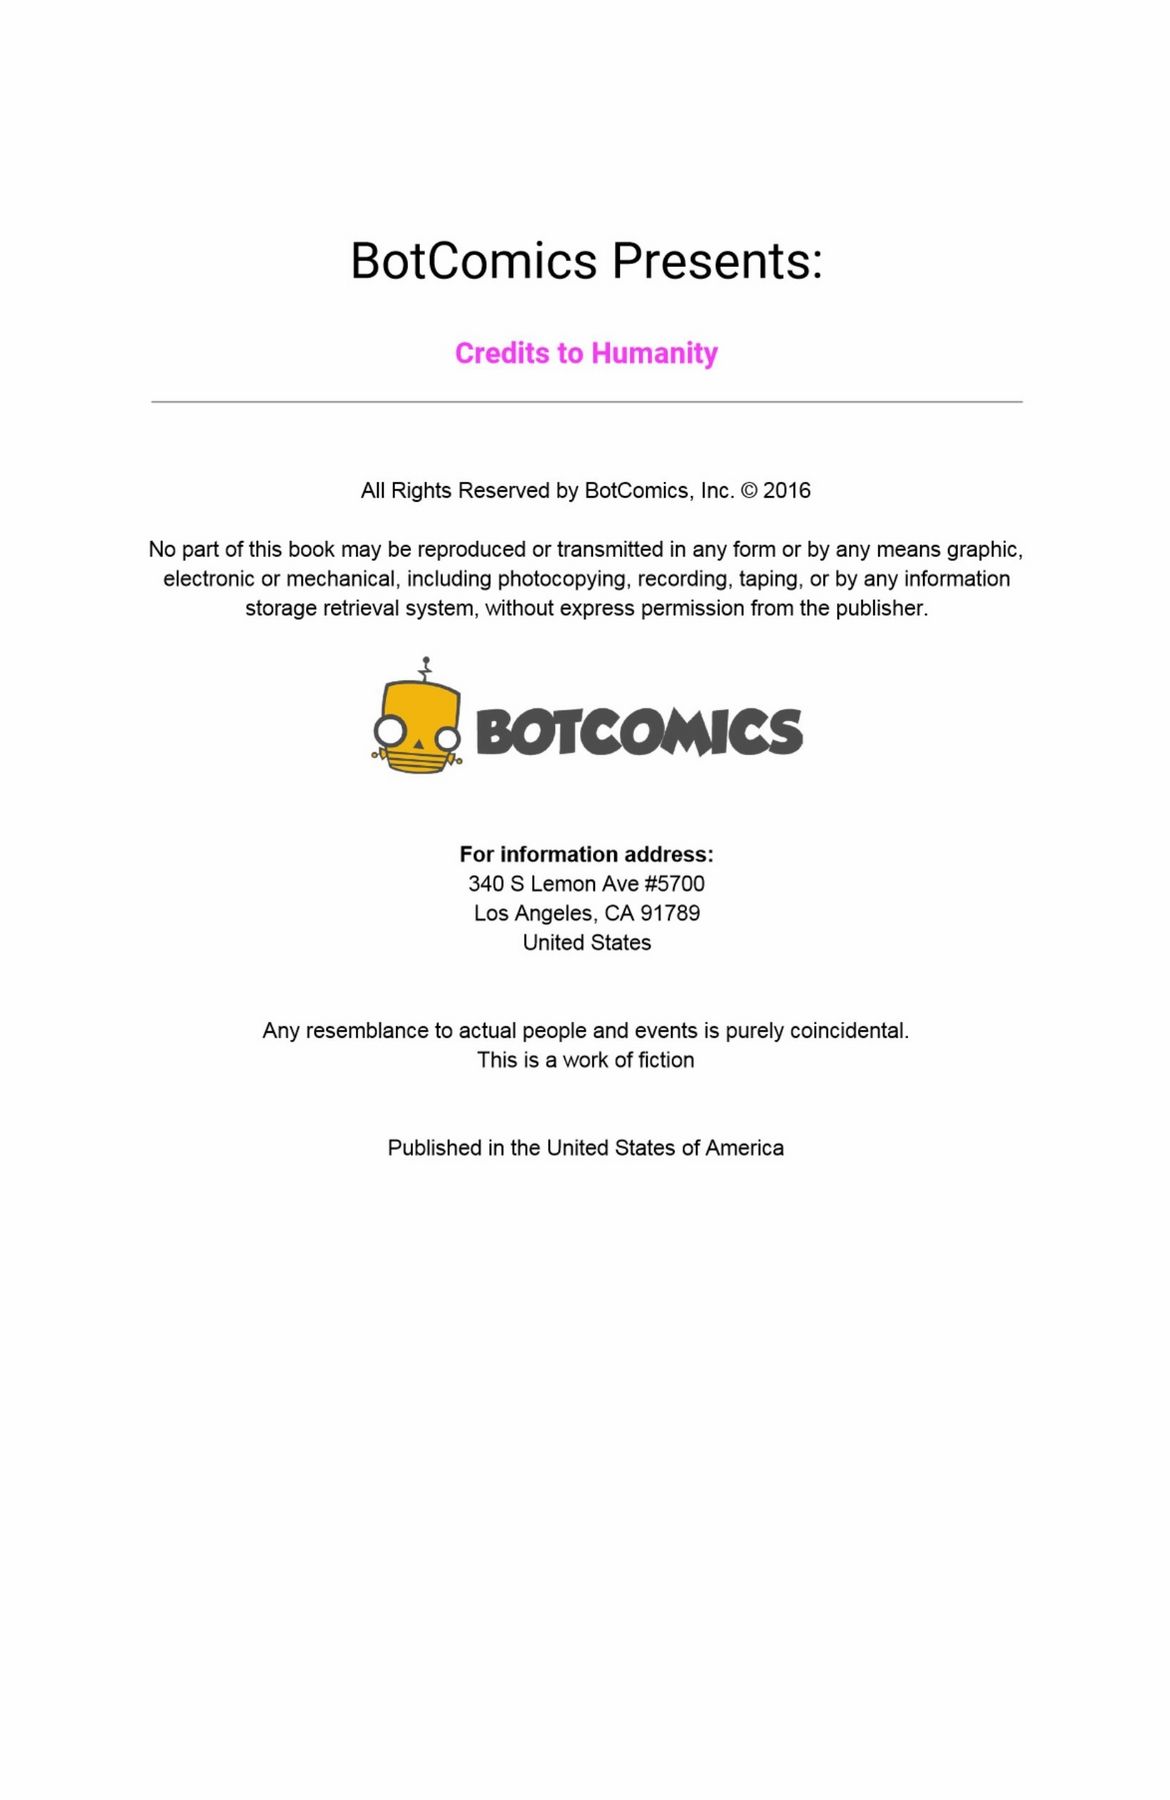 Credits to Humanity BotComics page 2